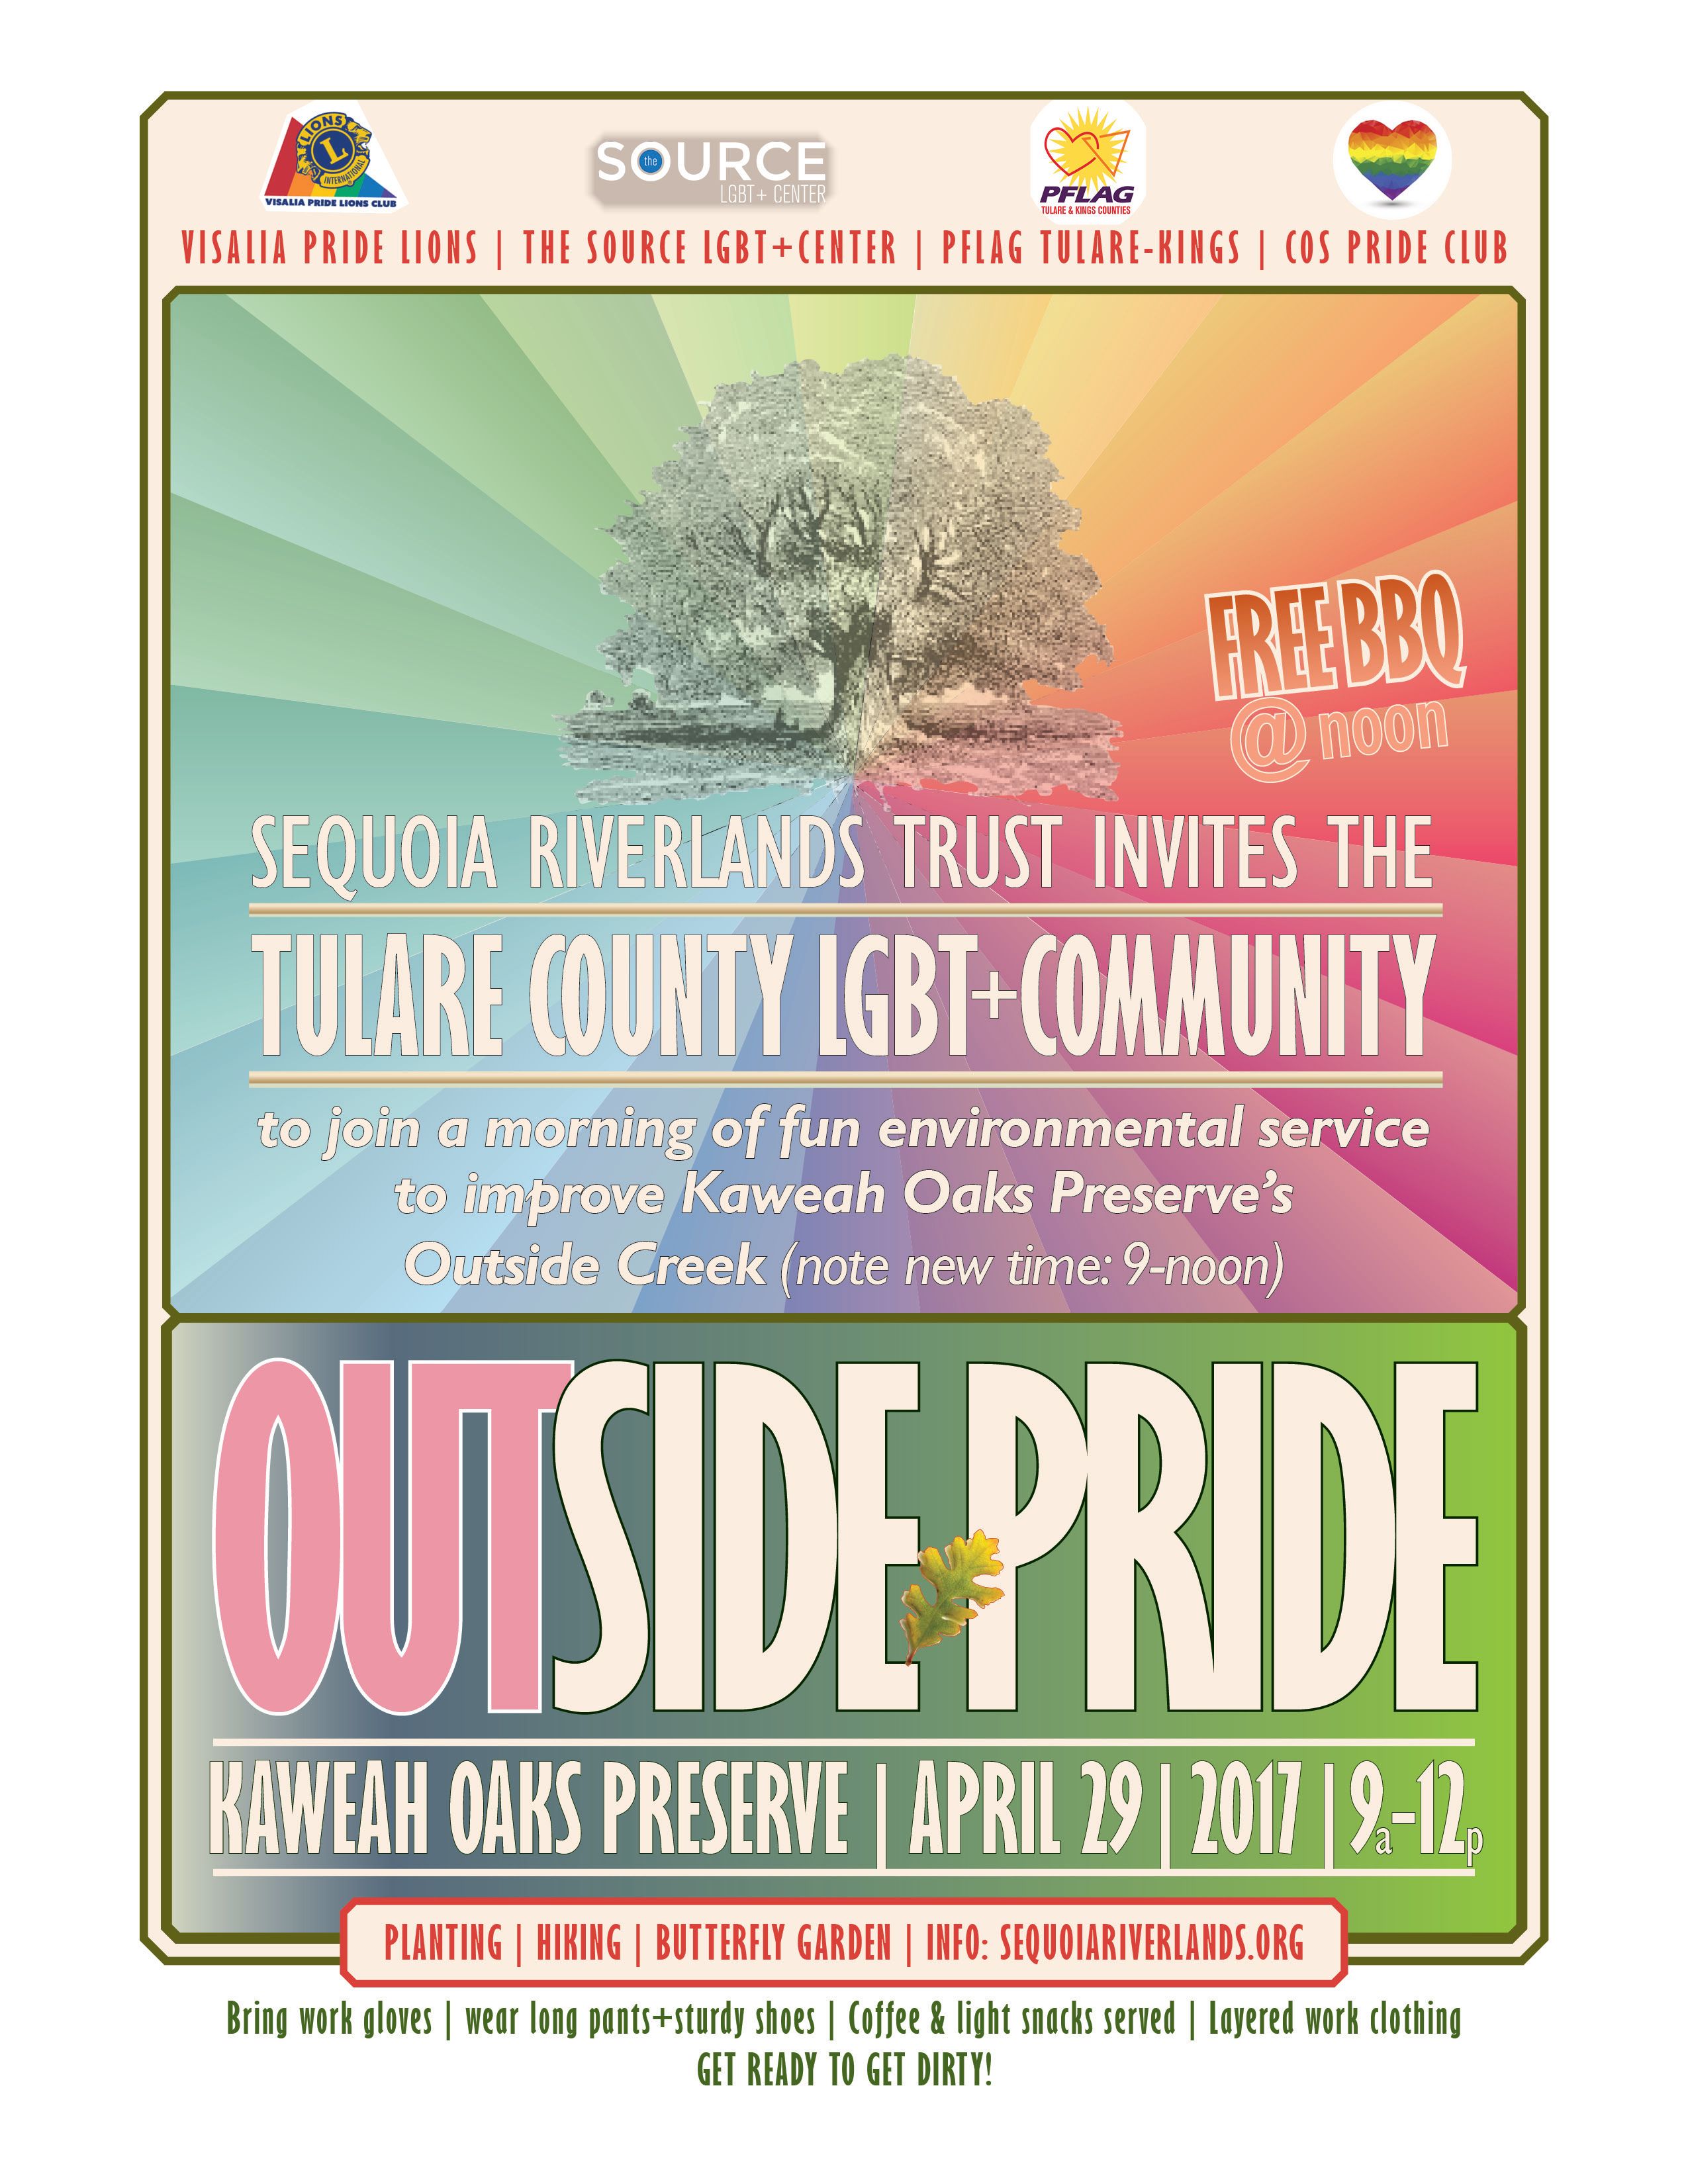 April 29 is Outside Pride Day at Kaweah Oaks Preserve